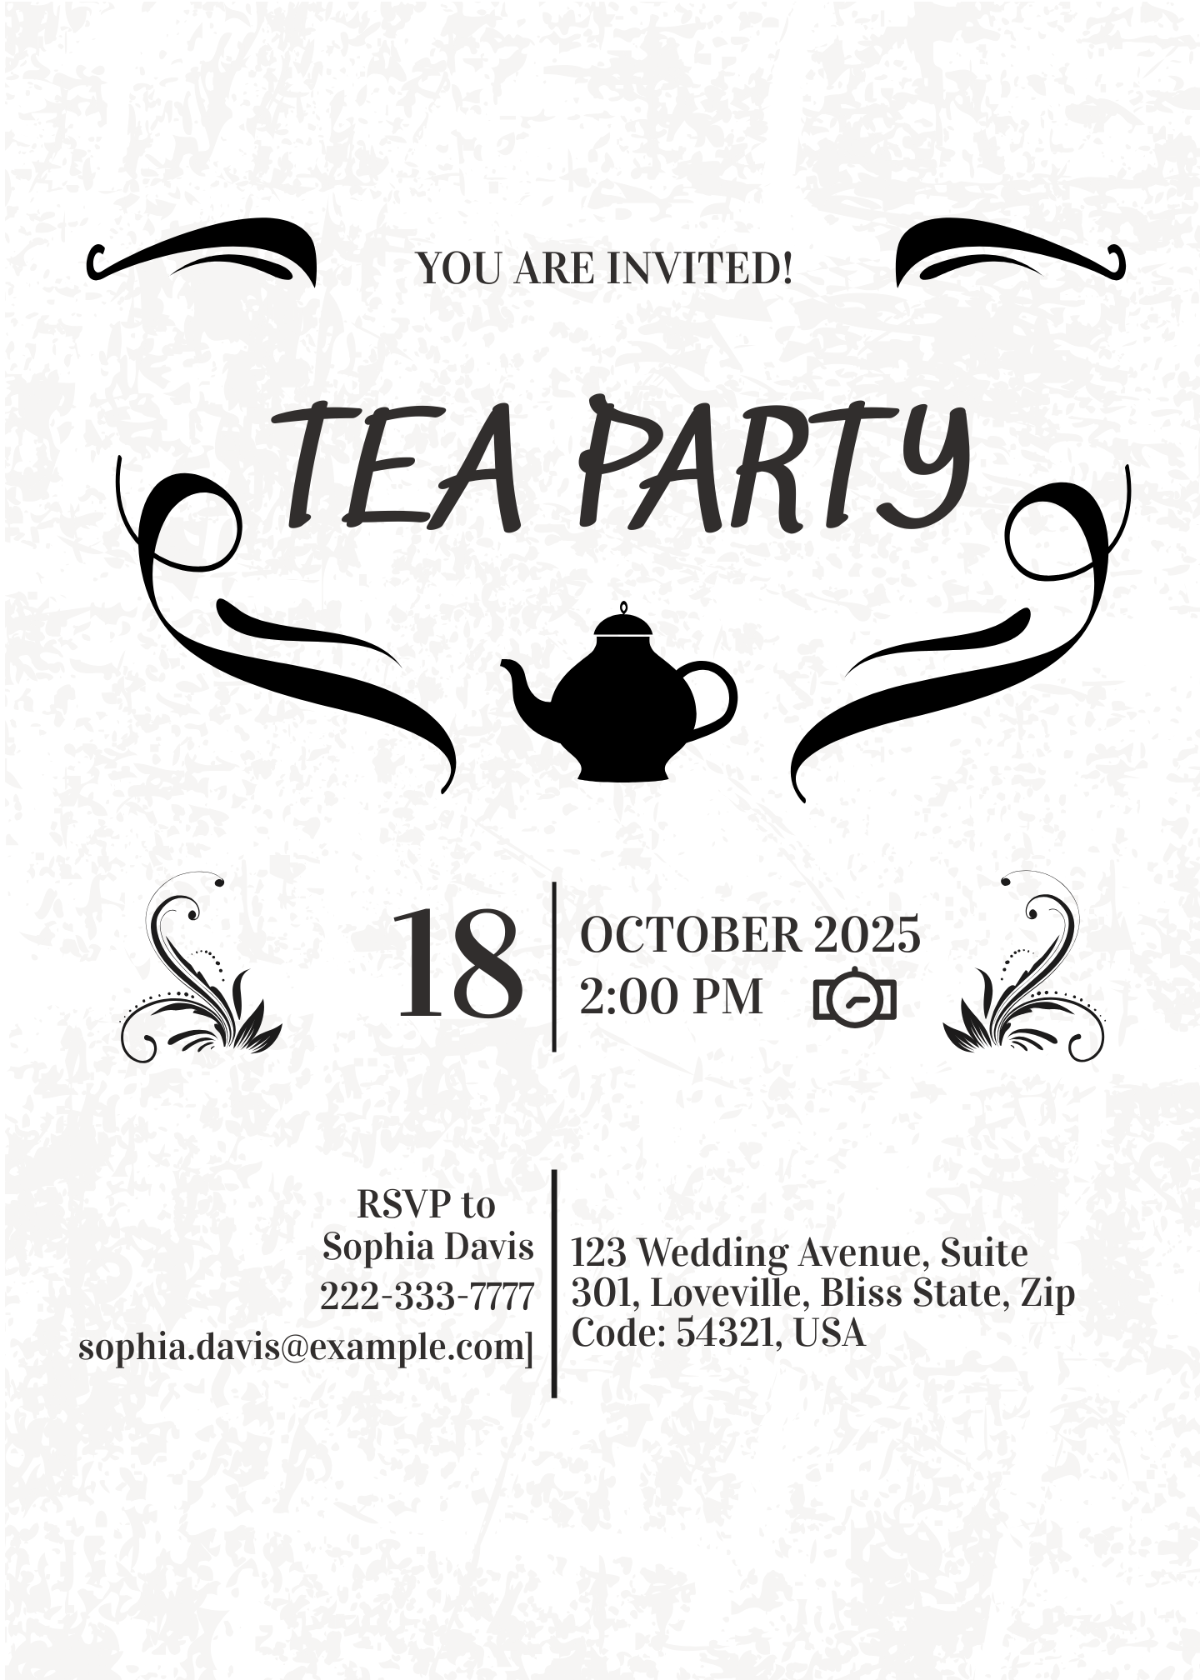 Sample Tea Party Invitation